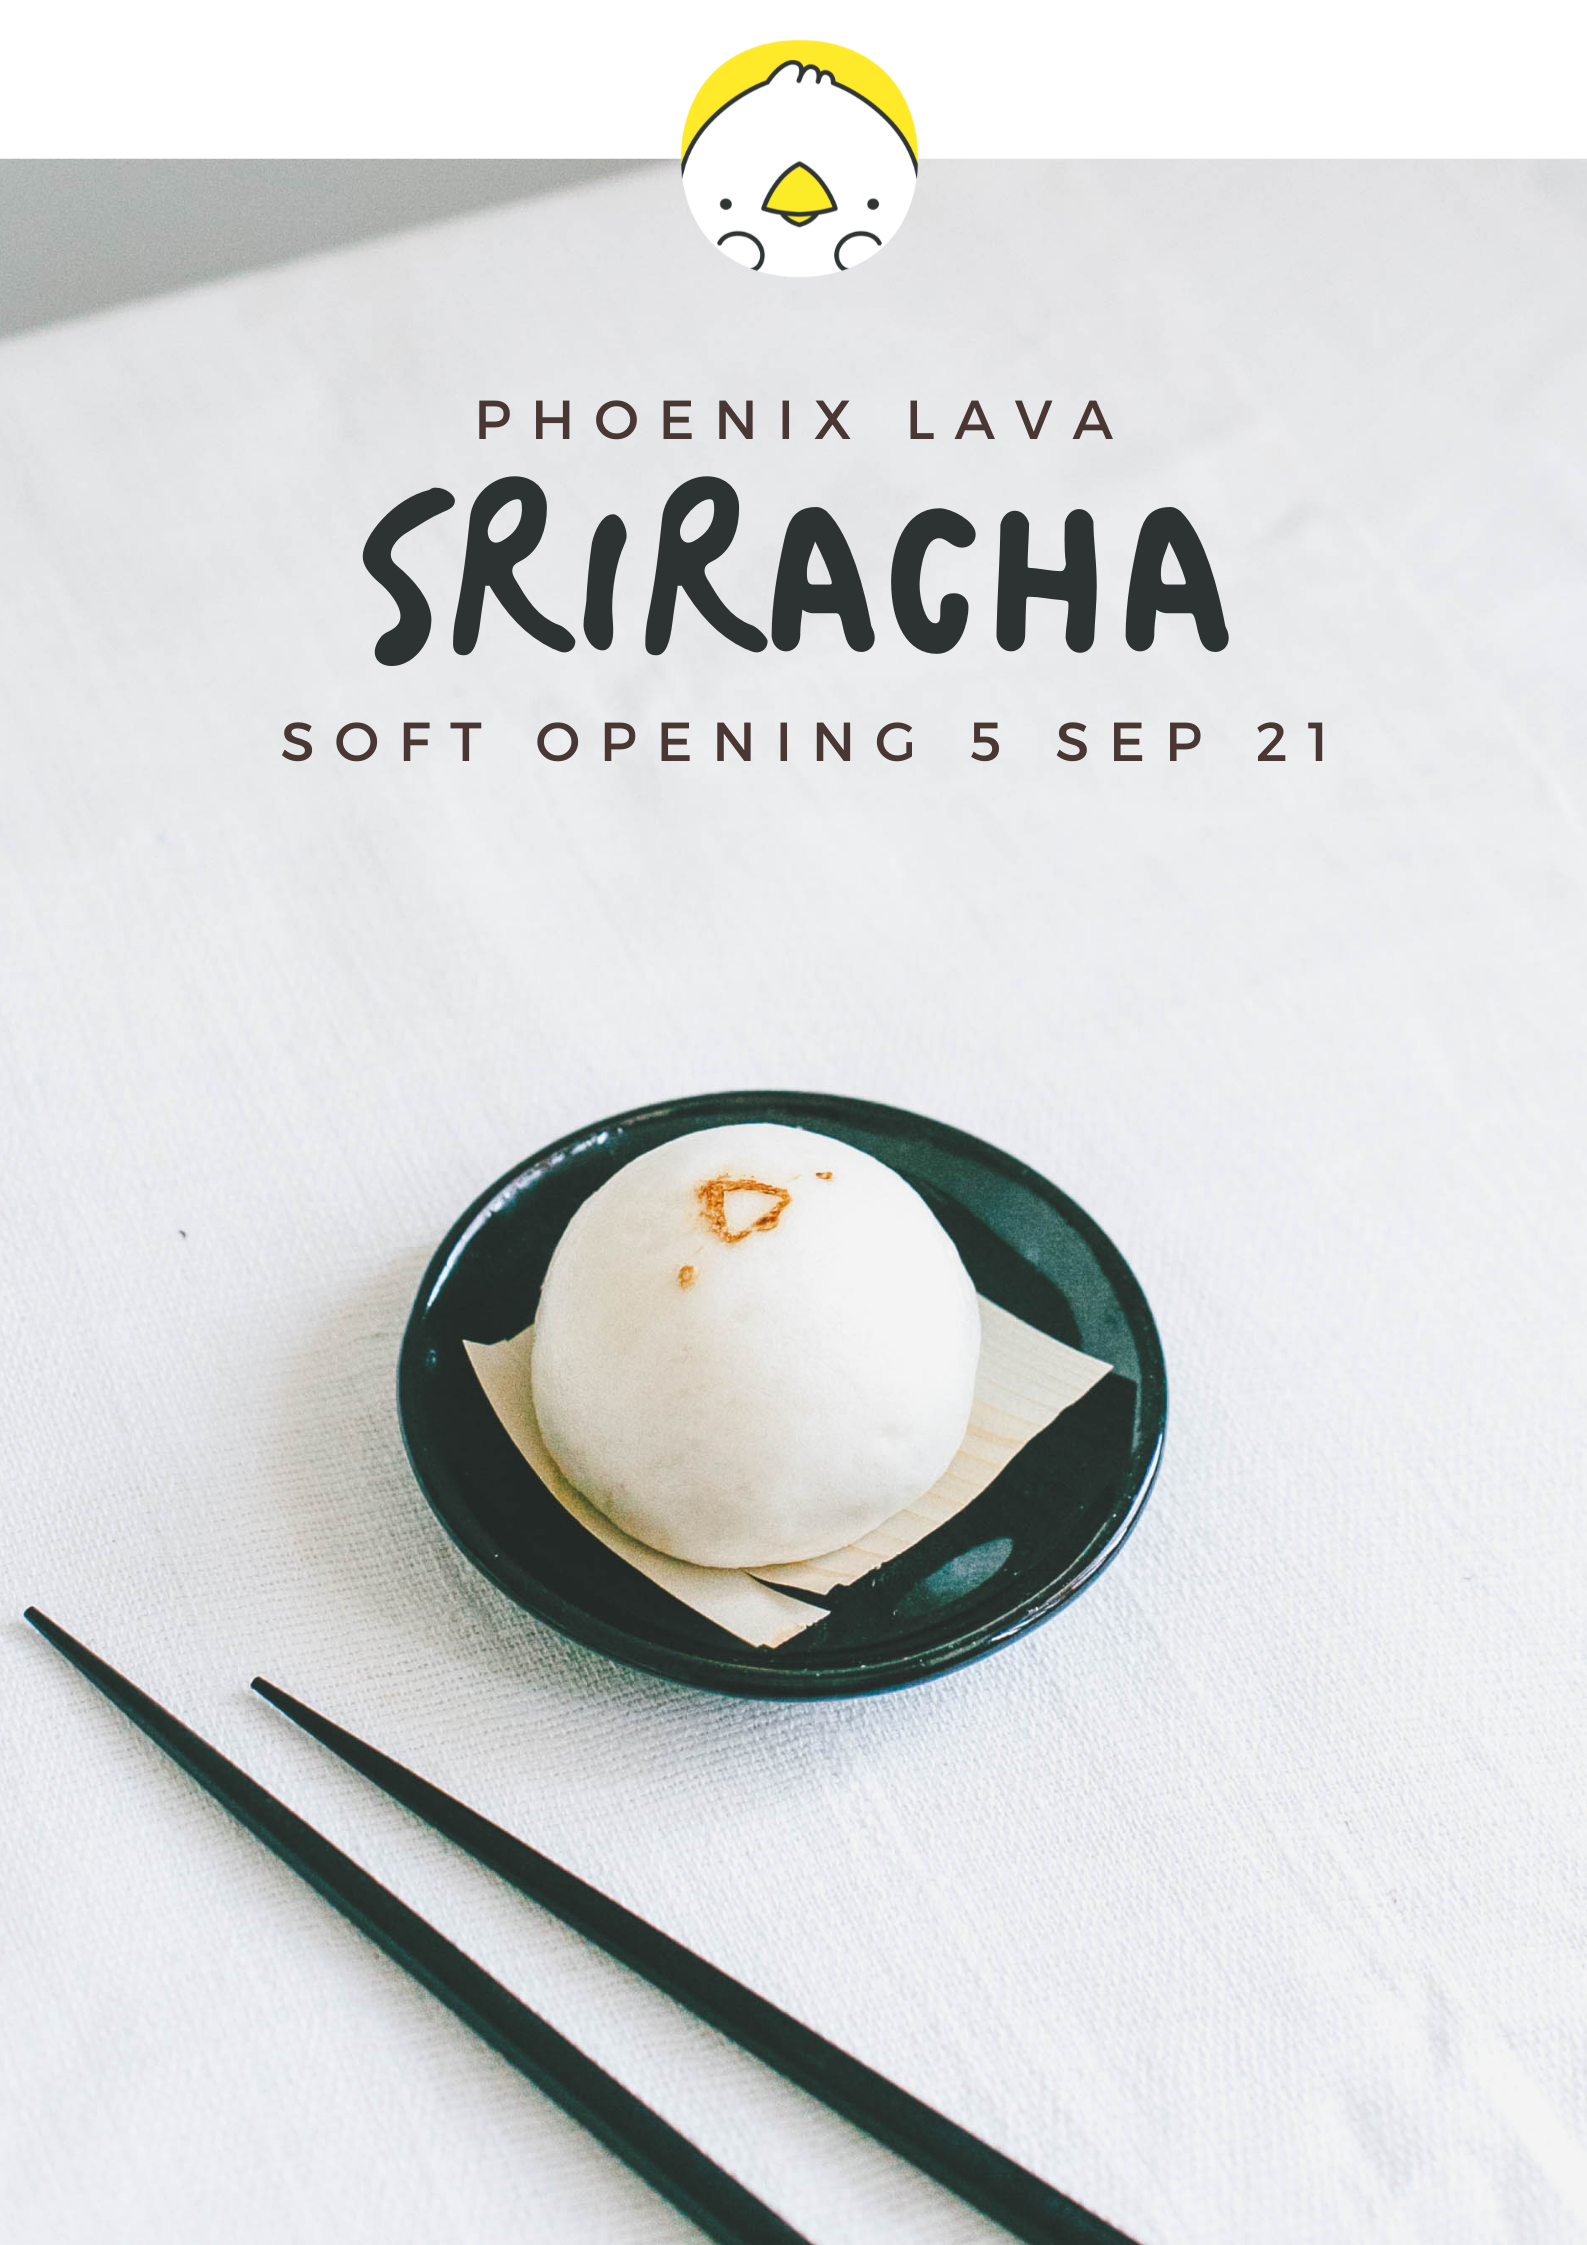 Phoenix Lava เจพาร์ค ศรีราชา นิฮอน มูระ J-Park Sriracha 日本むら。